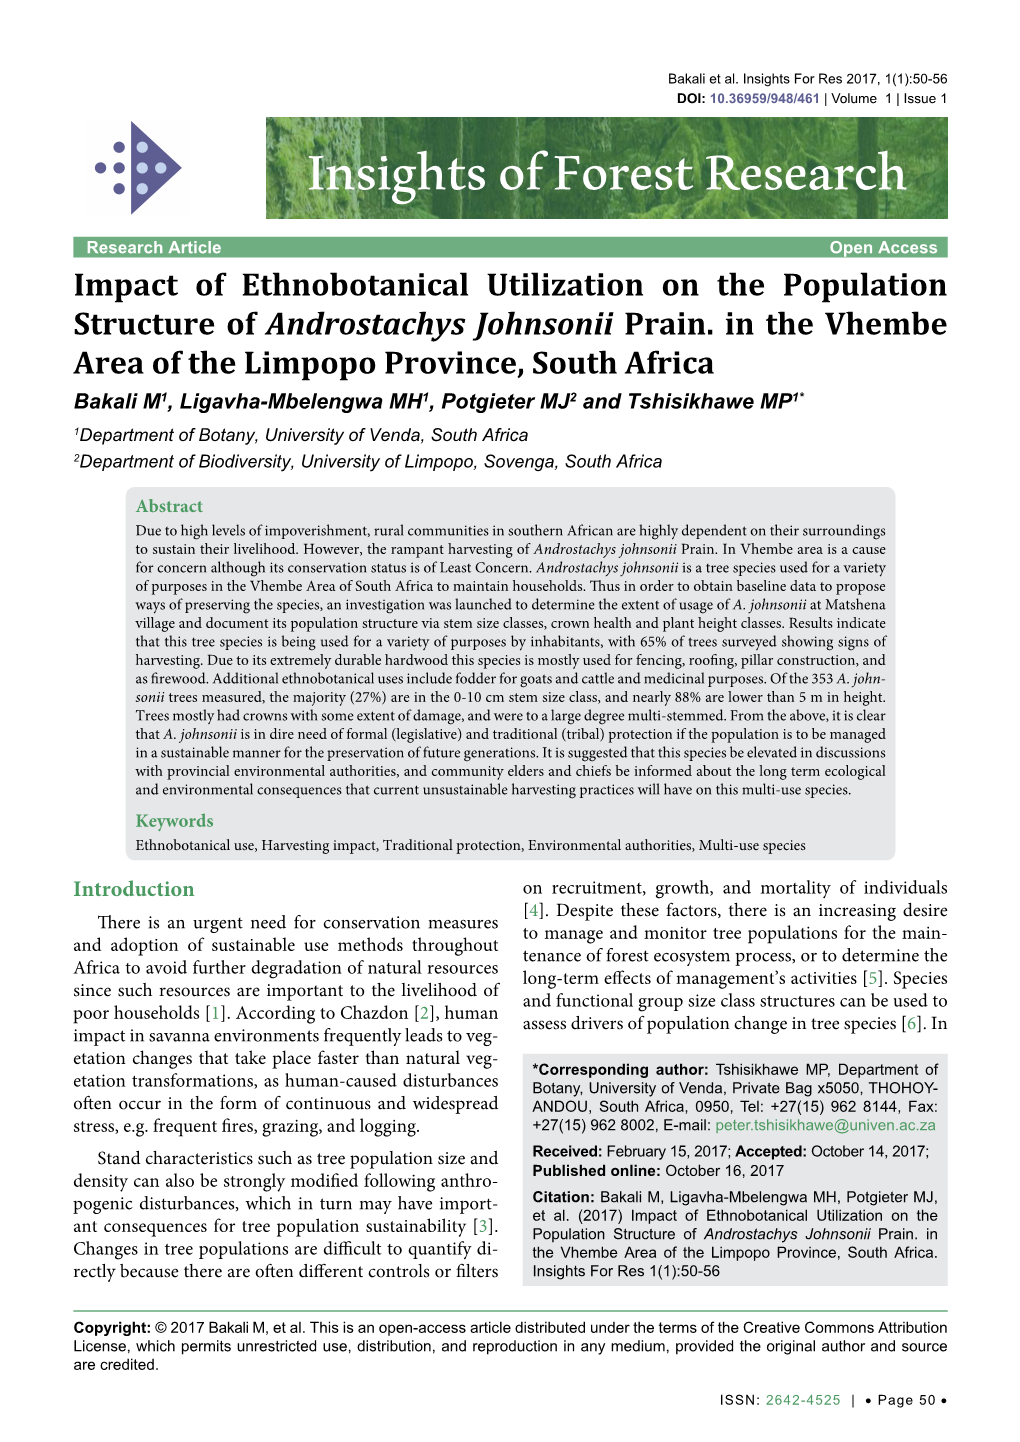 Impact of Ethnobotanical Utilization on the Population Structure of Androstachys Johnsonii Prain